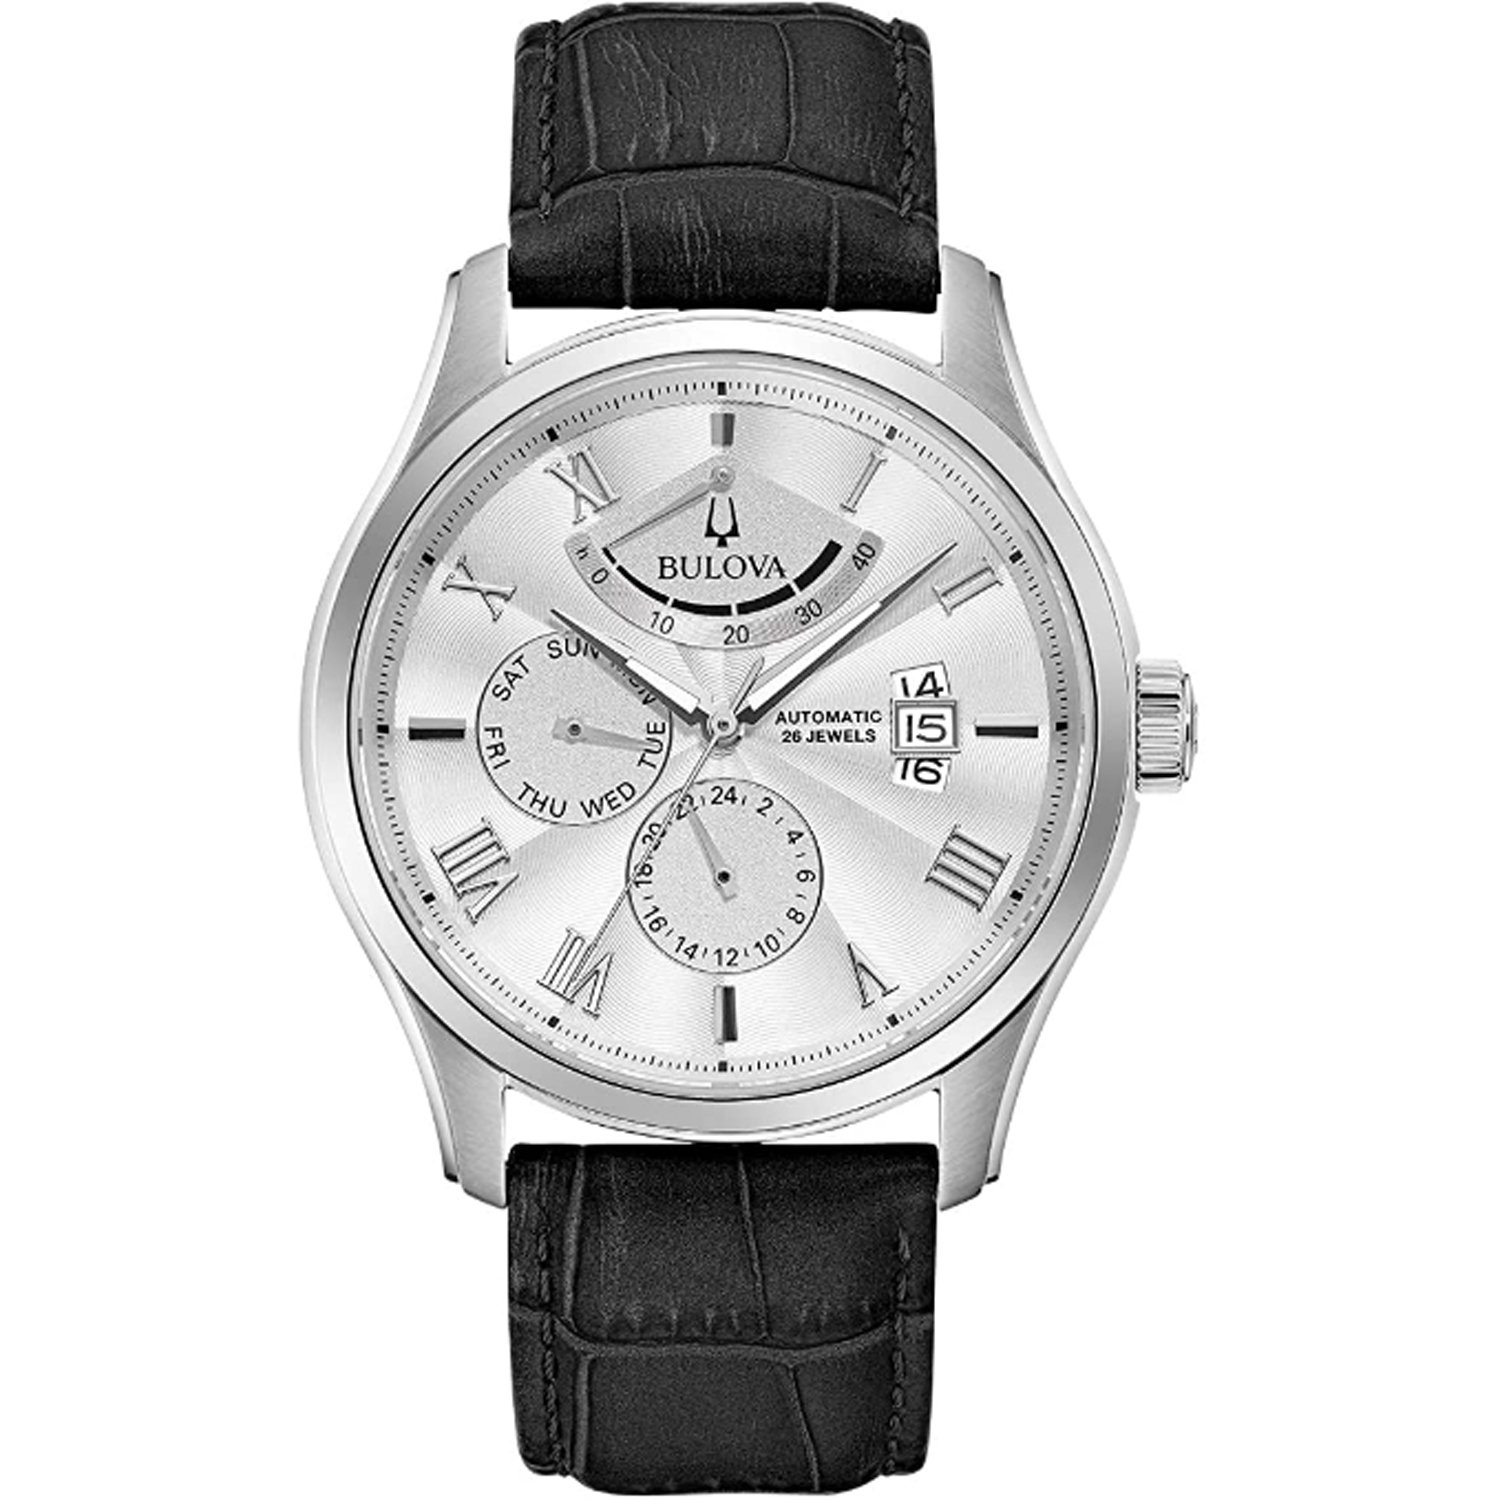 Bulova Classic Wilton Automatic Men's Watch Black Leather Strap / White Dial 96C141